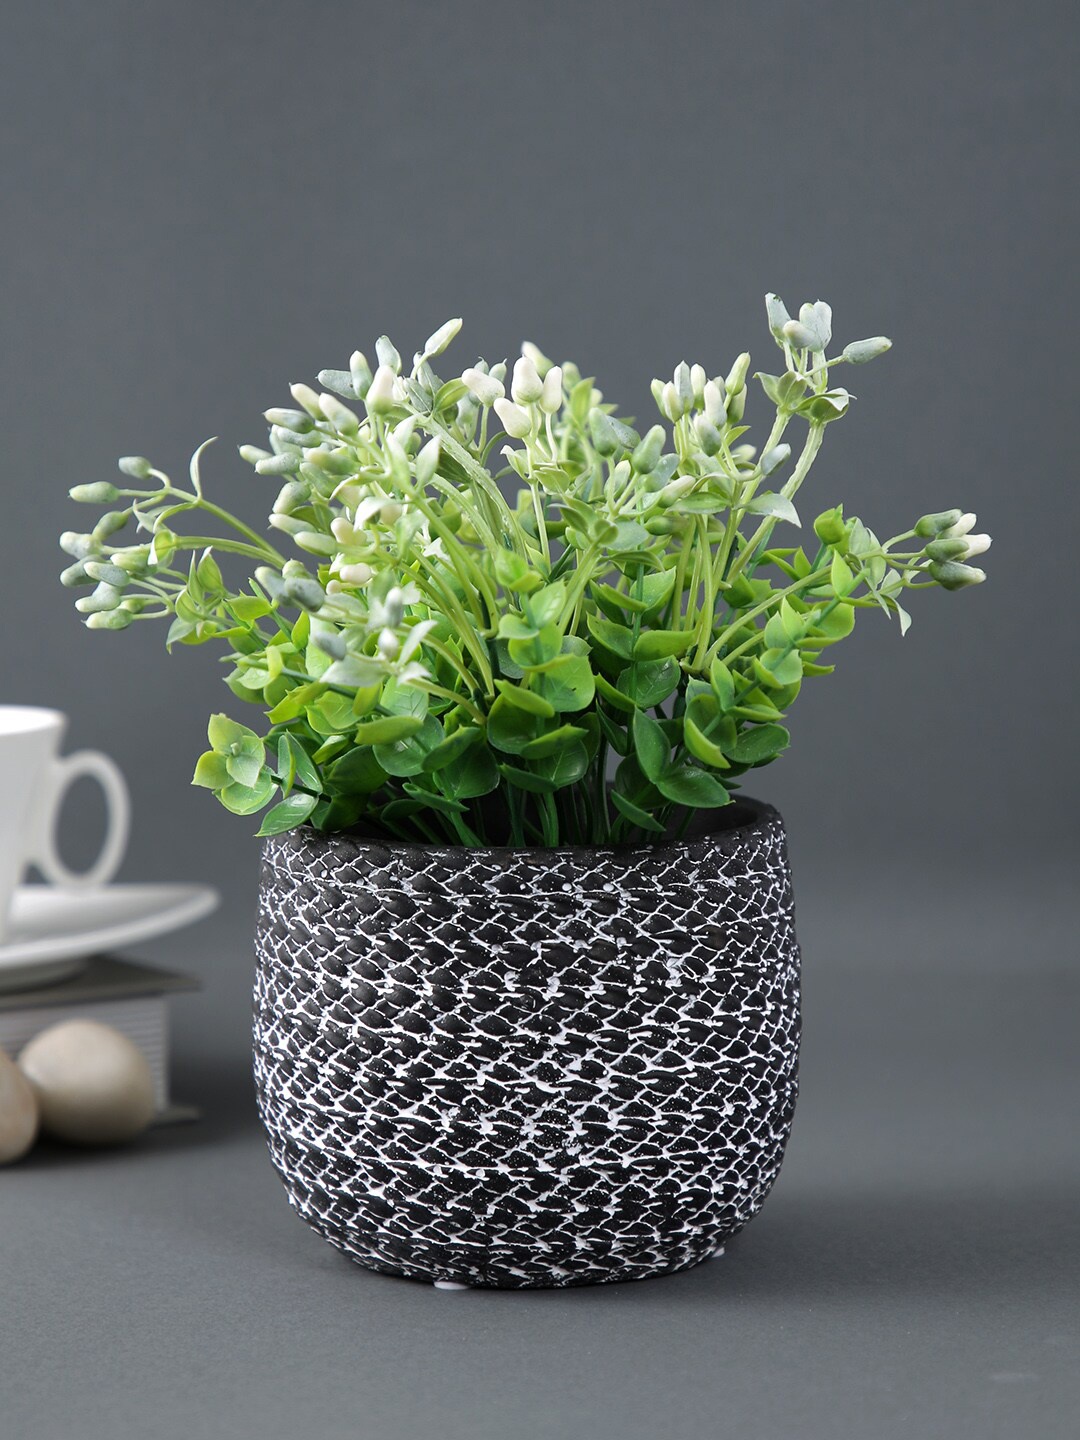 

TAYHAA Black & White Textured Ceramic Planter